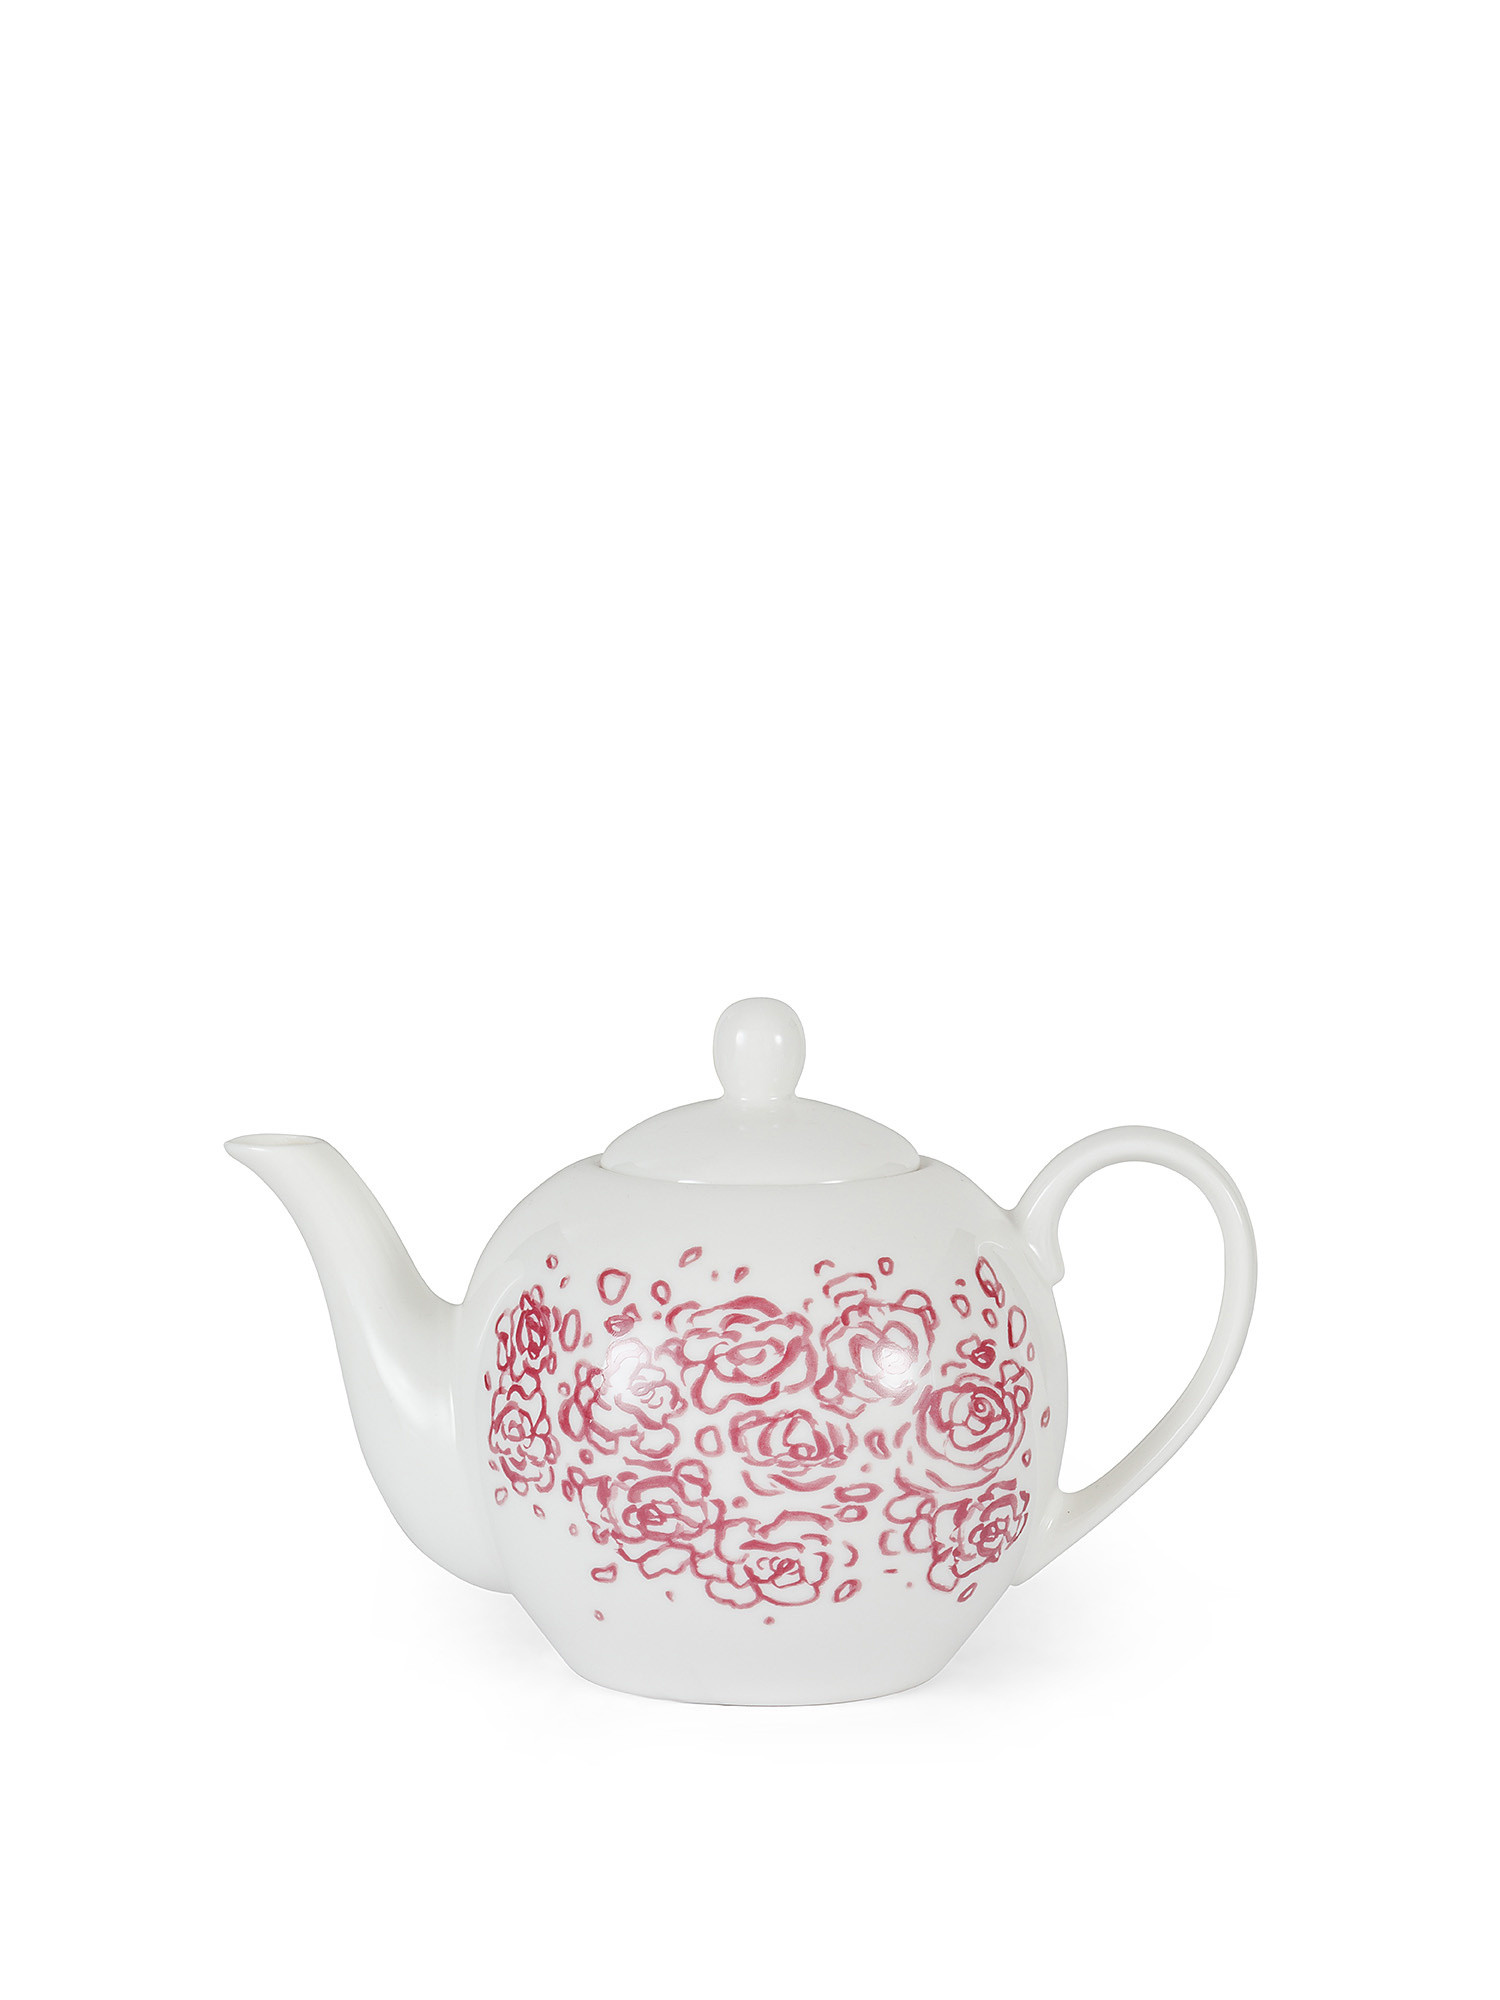 New bone china teapot with roses decoration, White, large image number 0